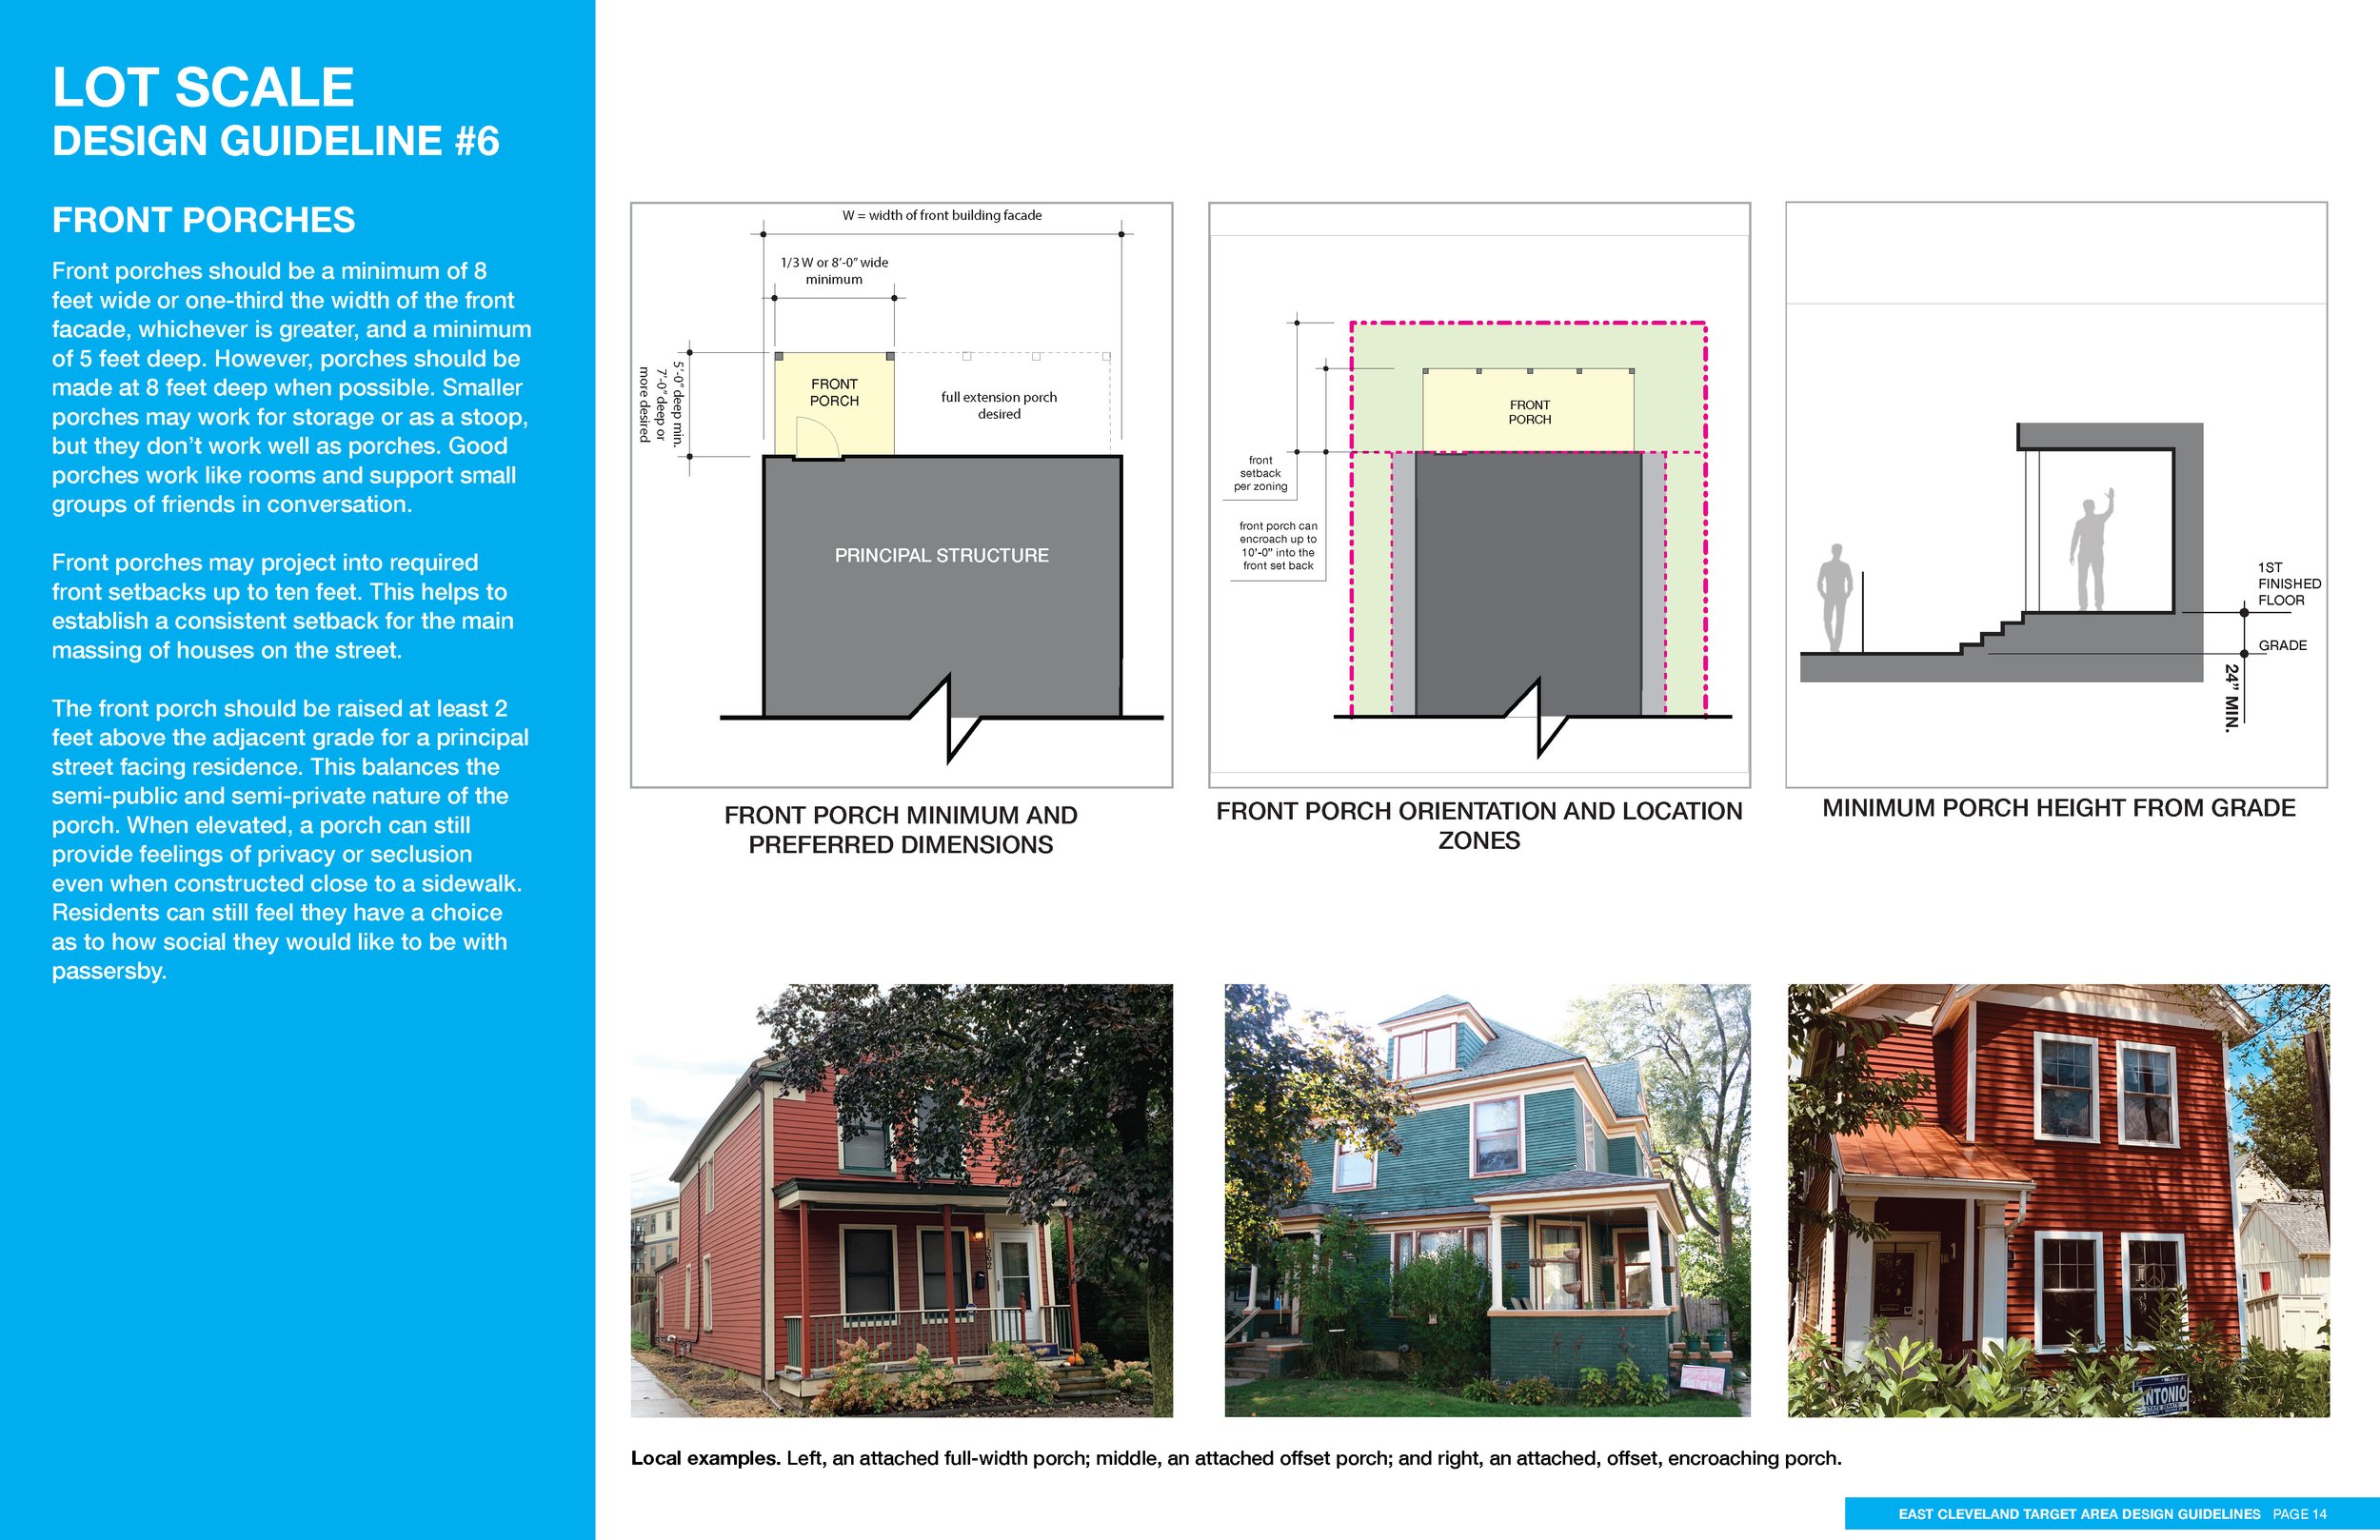 East Cleveland Target Area Design Guidelines_Page_14.jpg